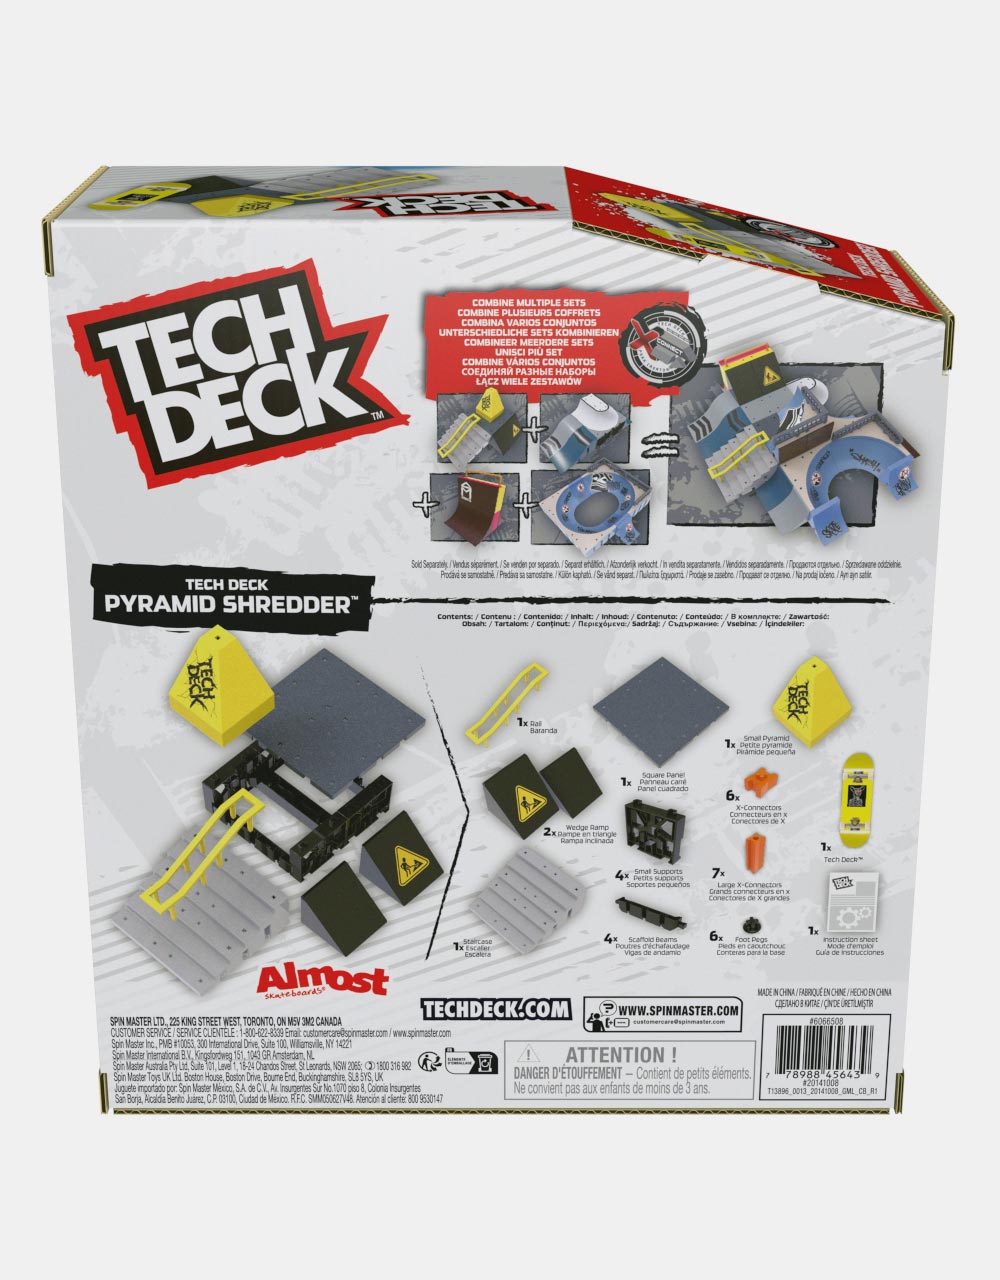 Tech Deck Fingerboard X-Connect Park Starter Kit - Pyramid Shredder